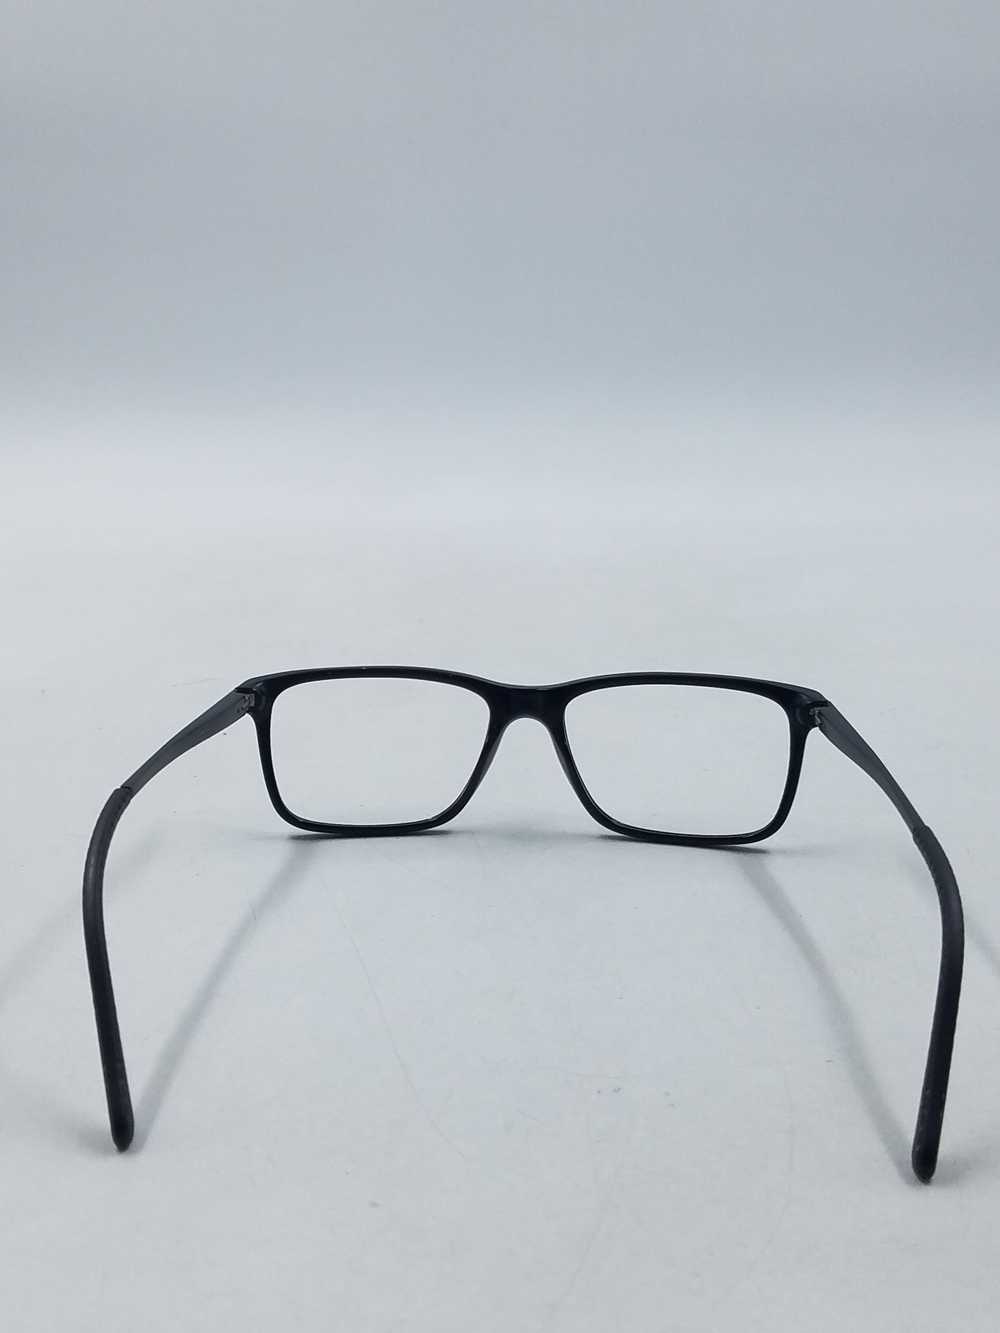 Ralph Lauren Black Square Eyeglasses - image 3